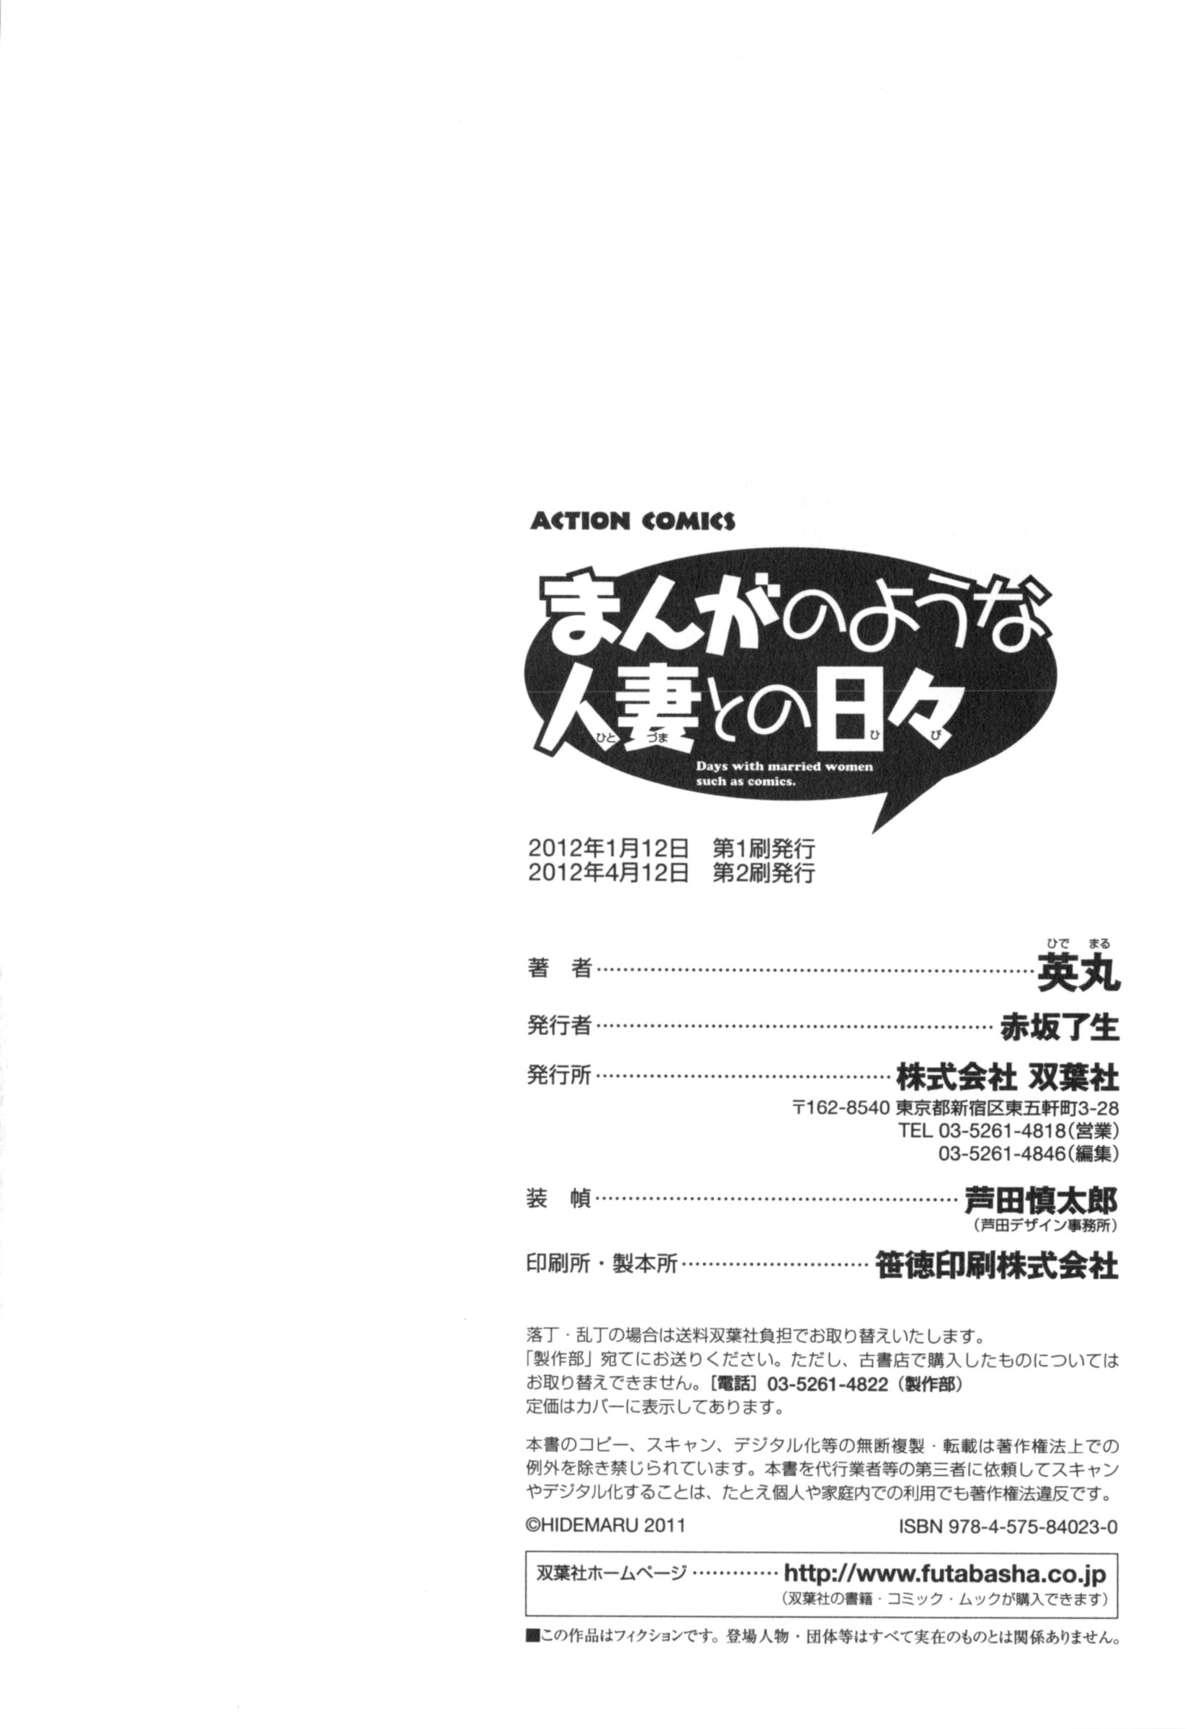 Playing Manga no youna Hitozuma to no Hibi - Days with Married Women such as Comics. Teenies - Page 193